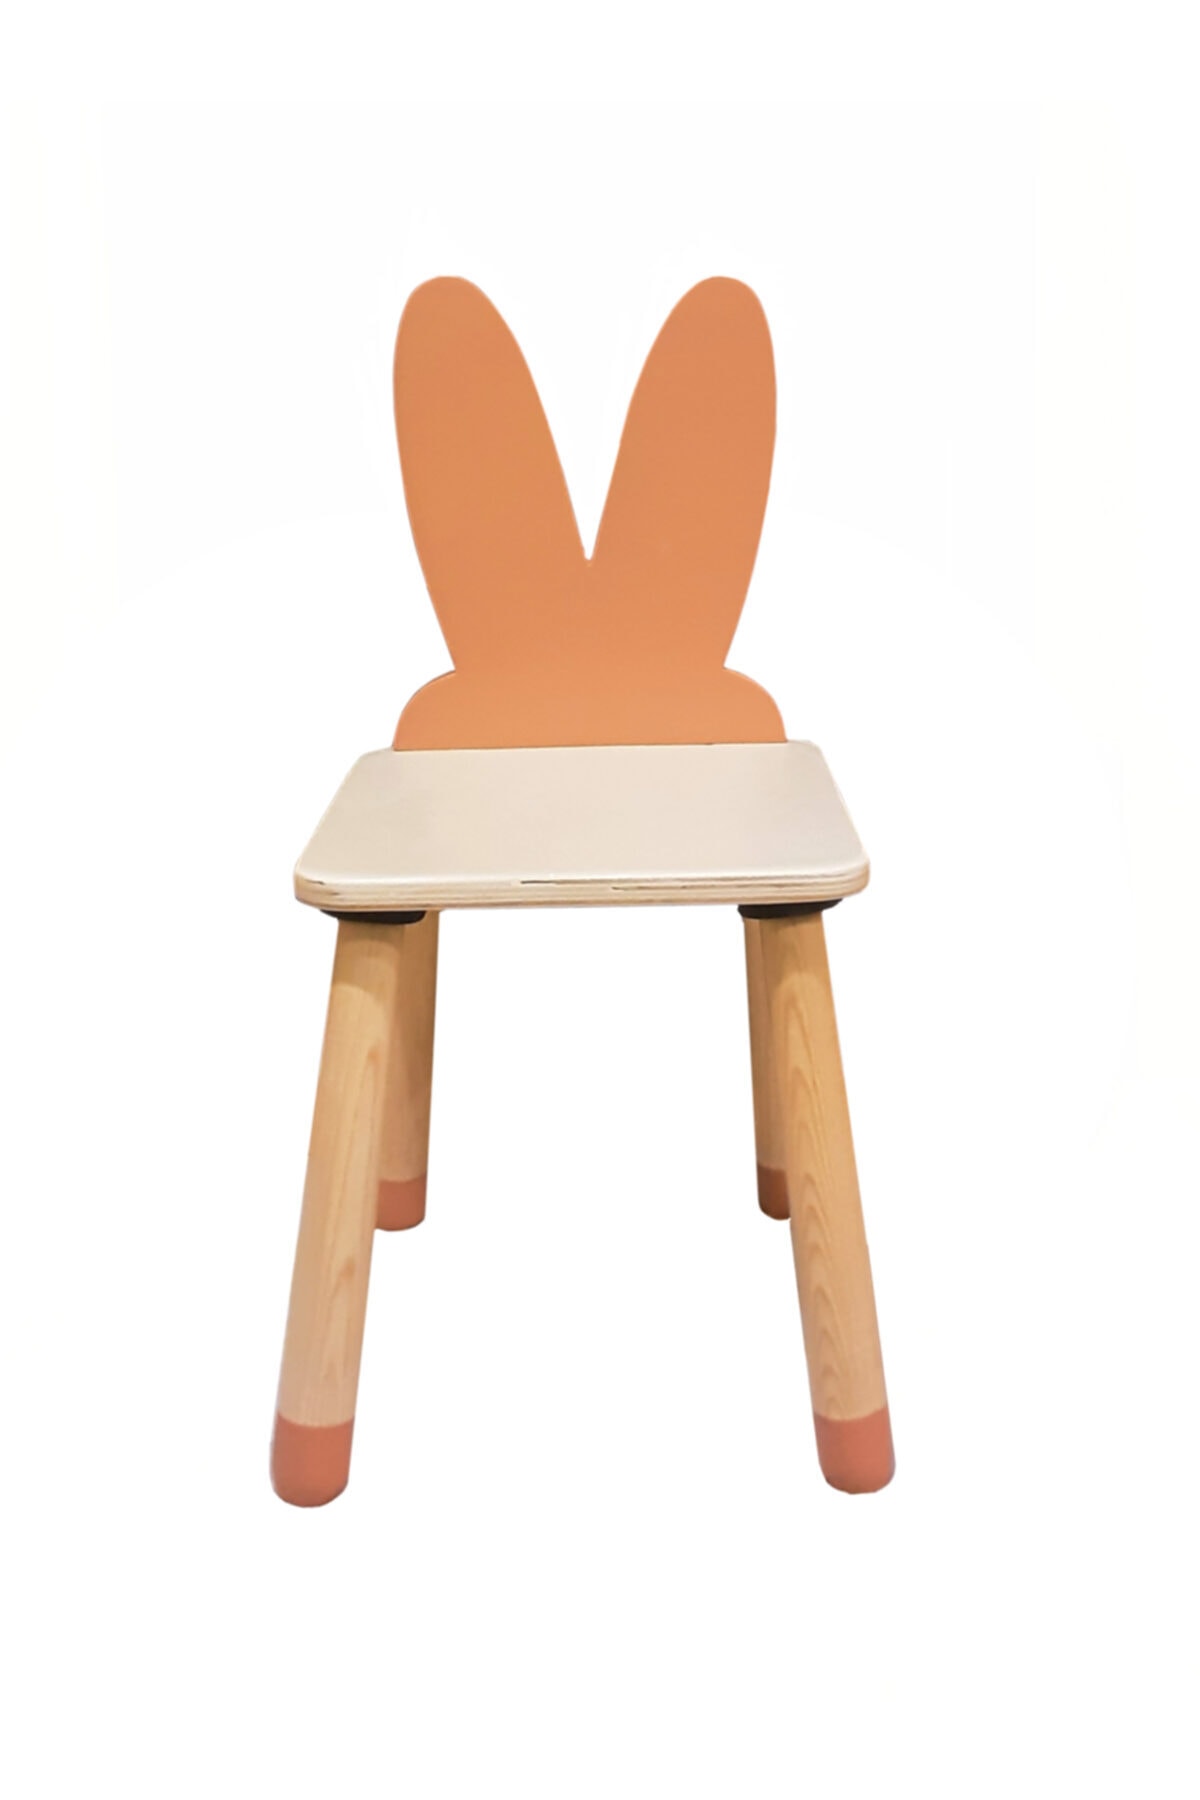 Woodnjoy Wood&joy Renkli Tavşan Sandalye